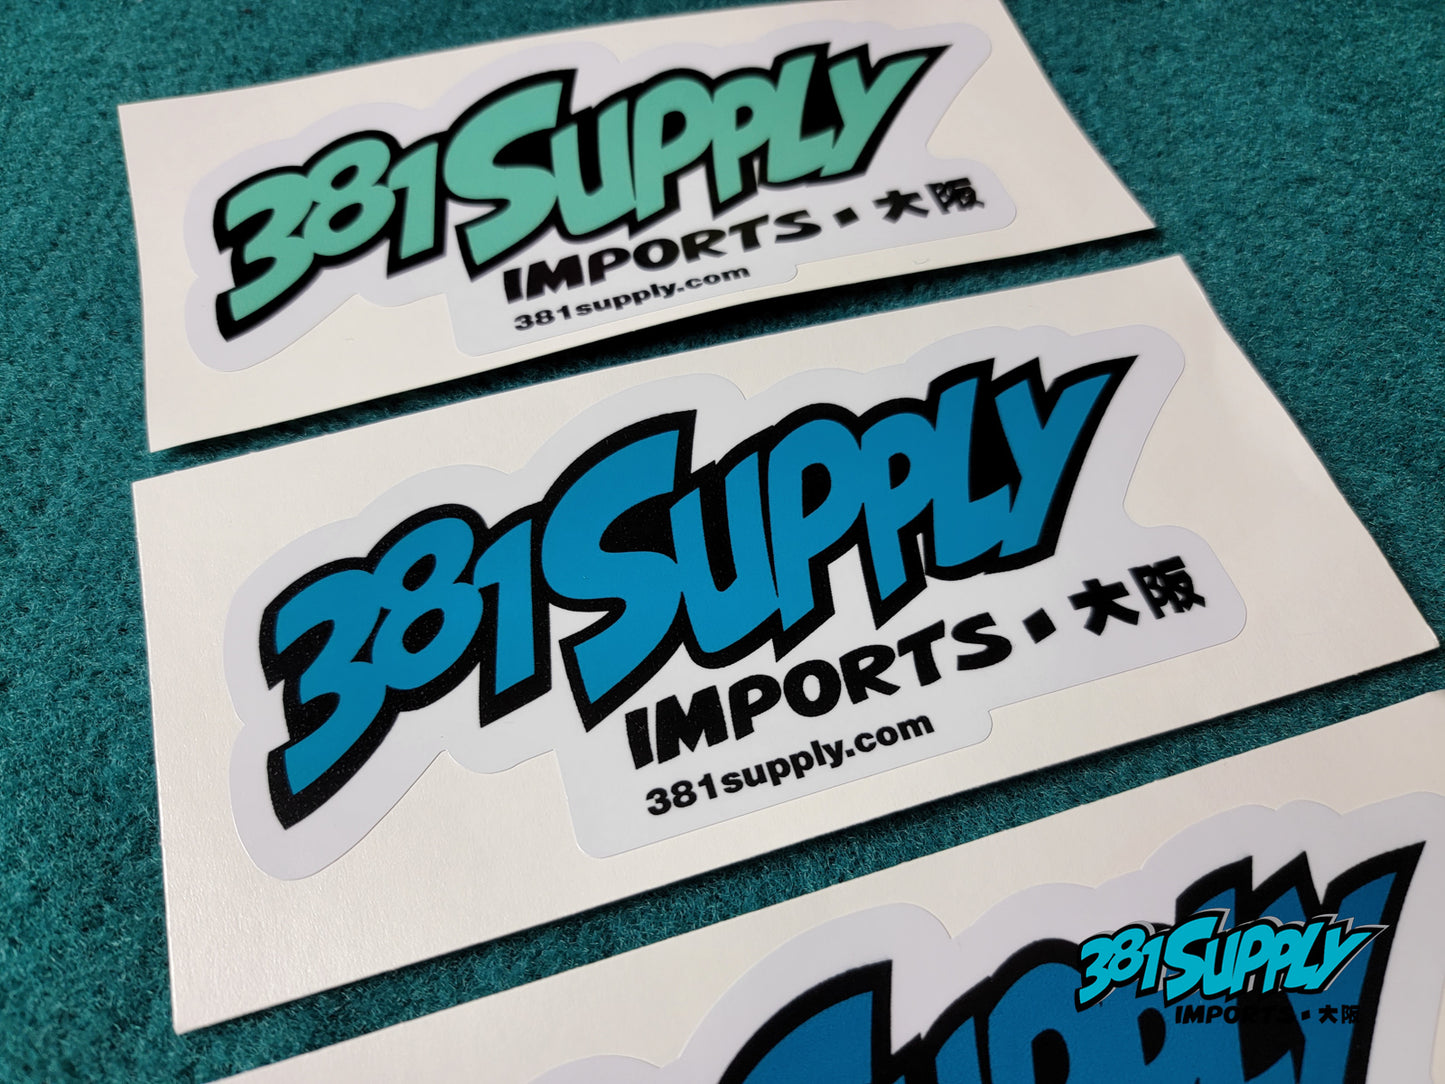 381Supply Stickers Slaps